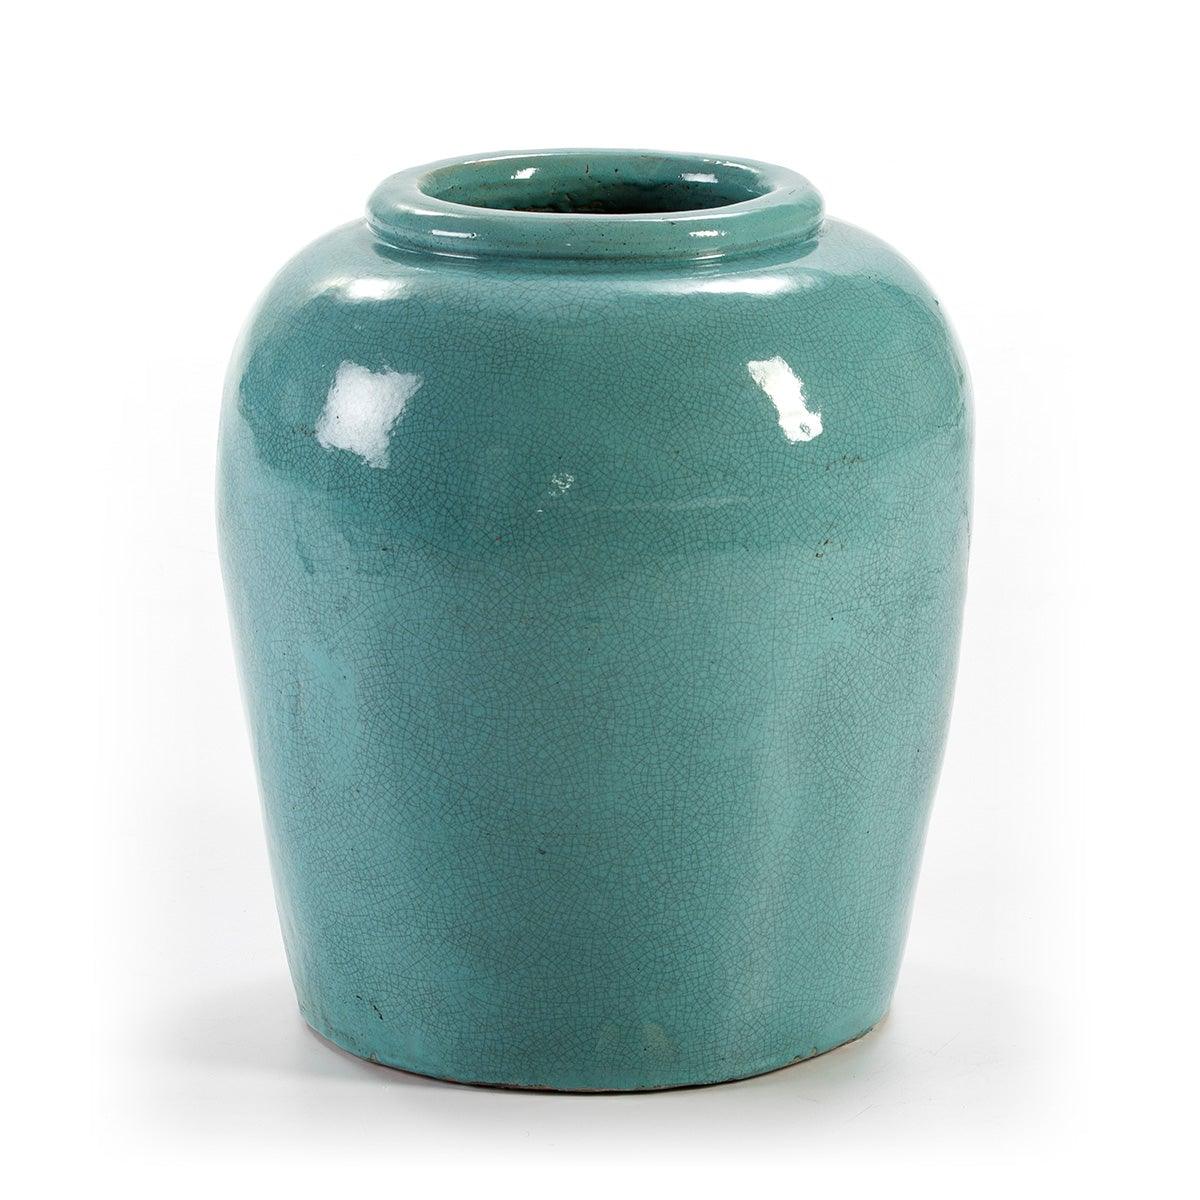 Blue Ceramic Flower Pot